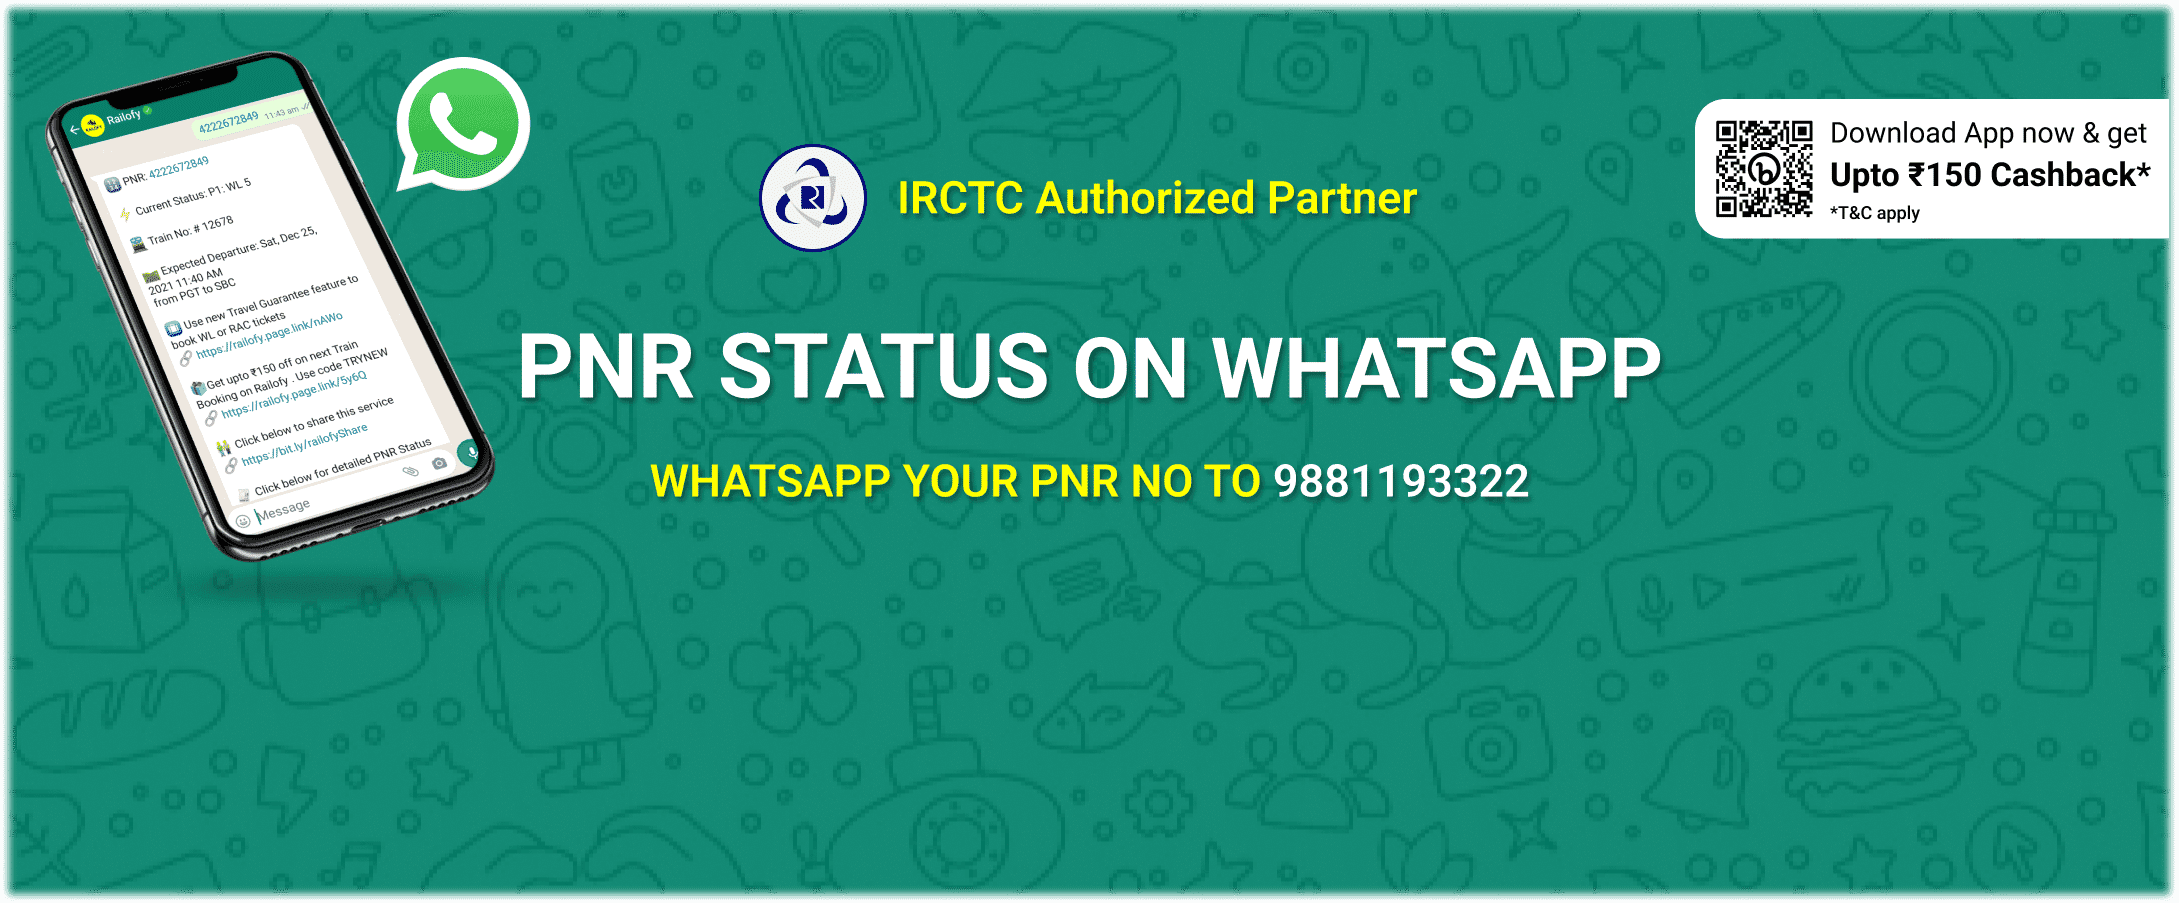 PNR status on Whatsapp